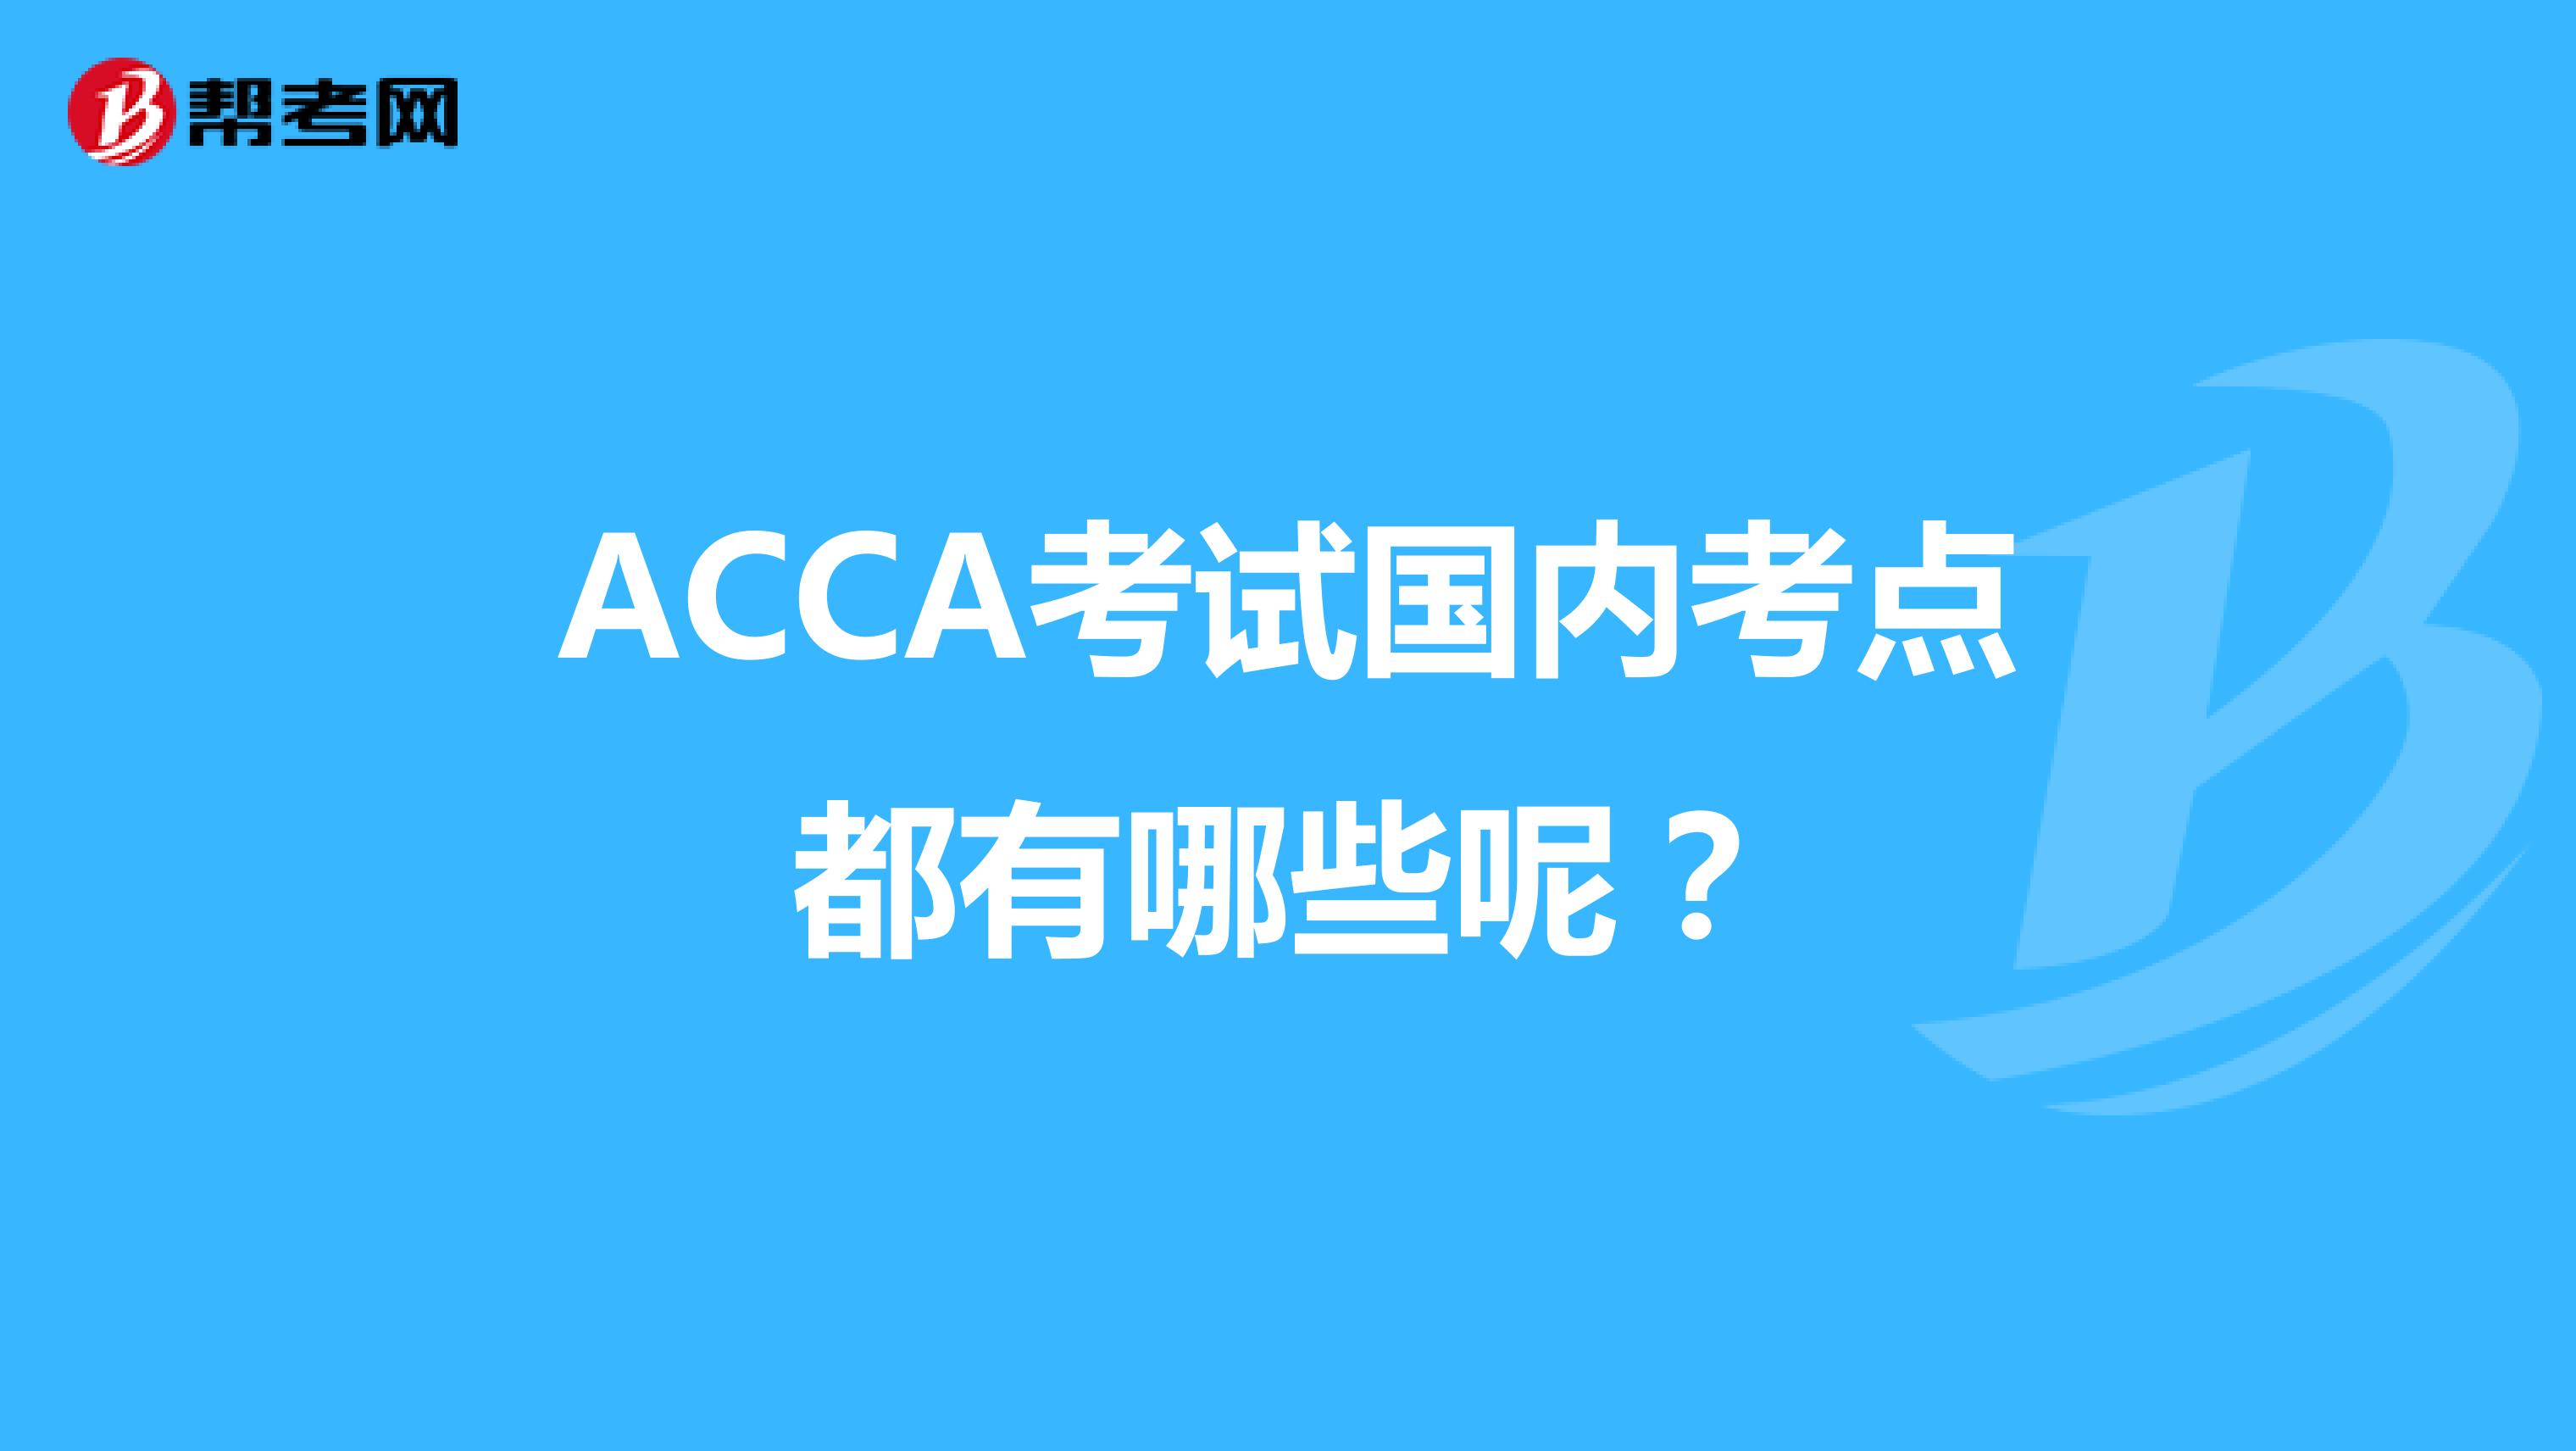 ACCA考试国内考点都有哪些呢？